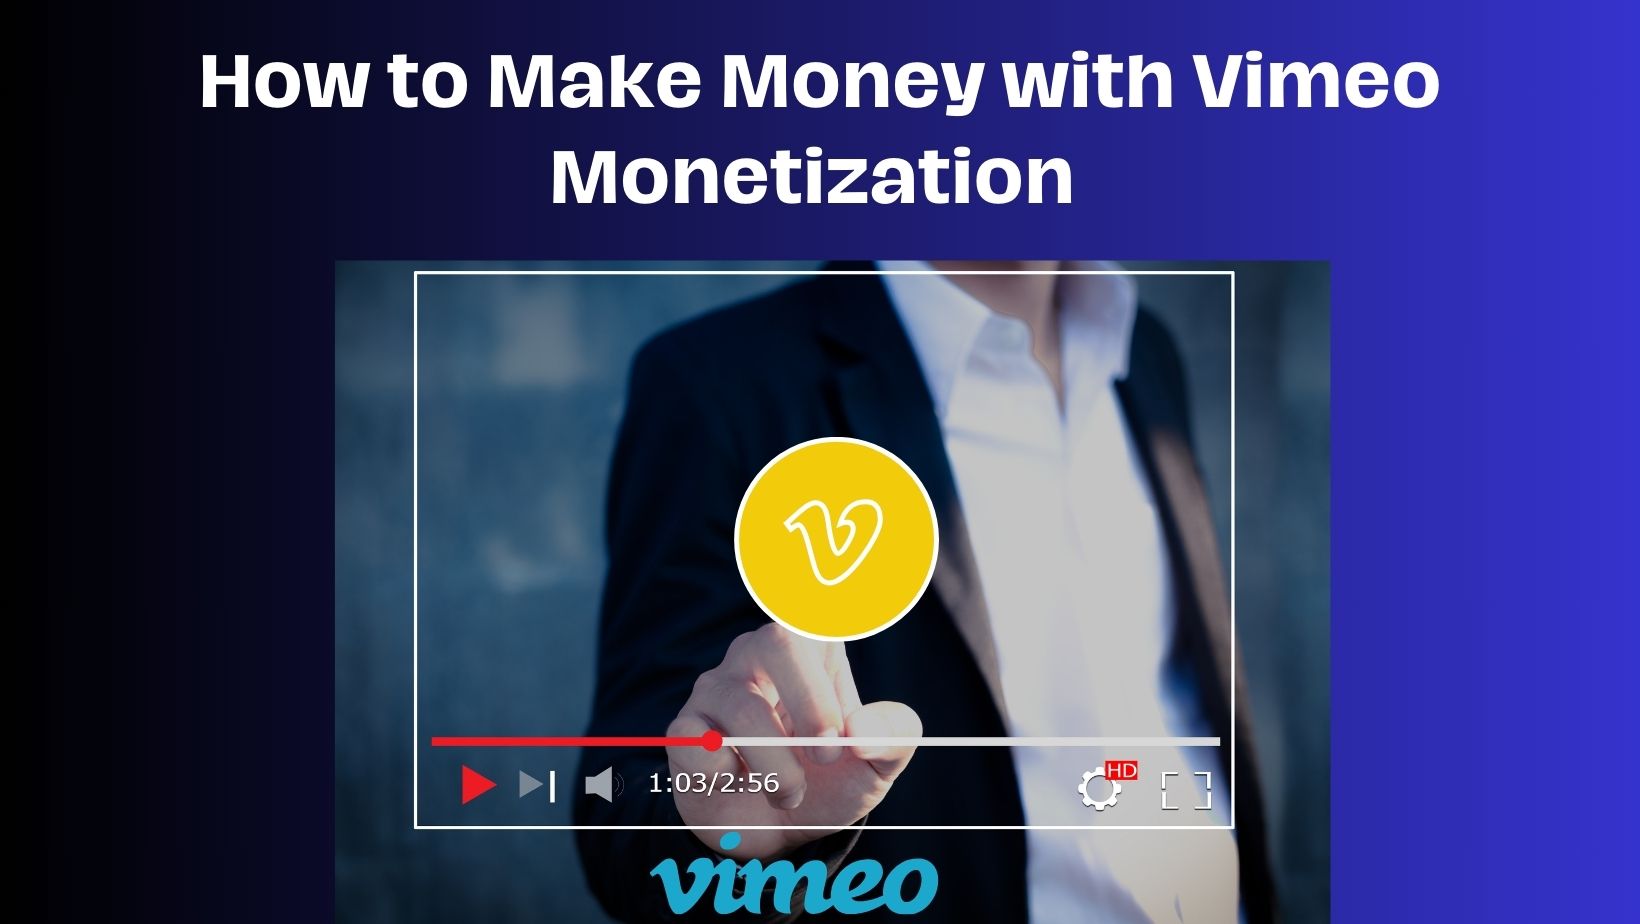 vimeo- monetization options available